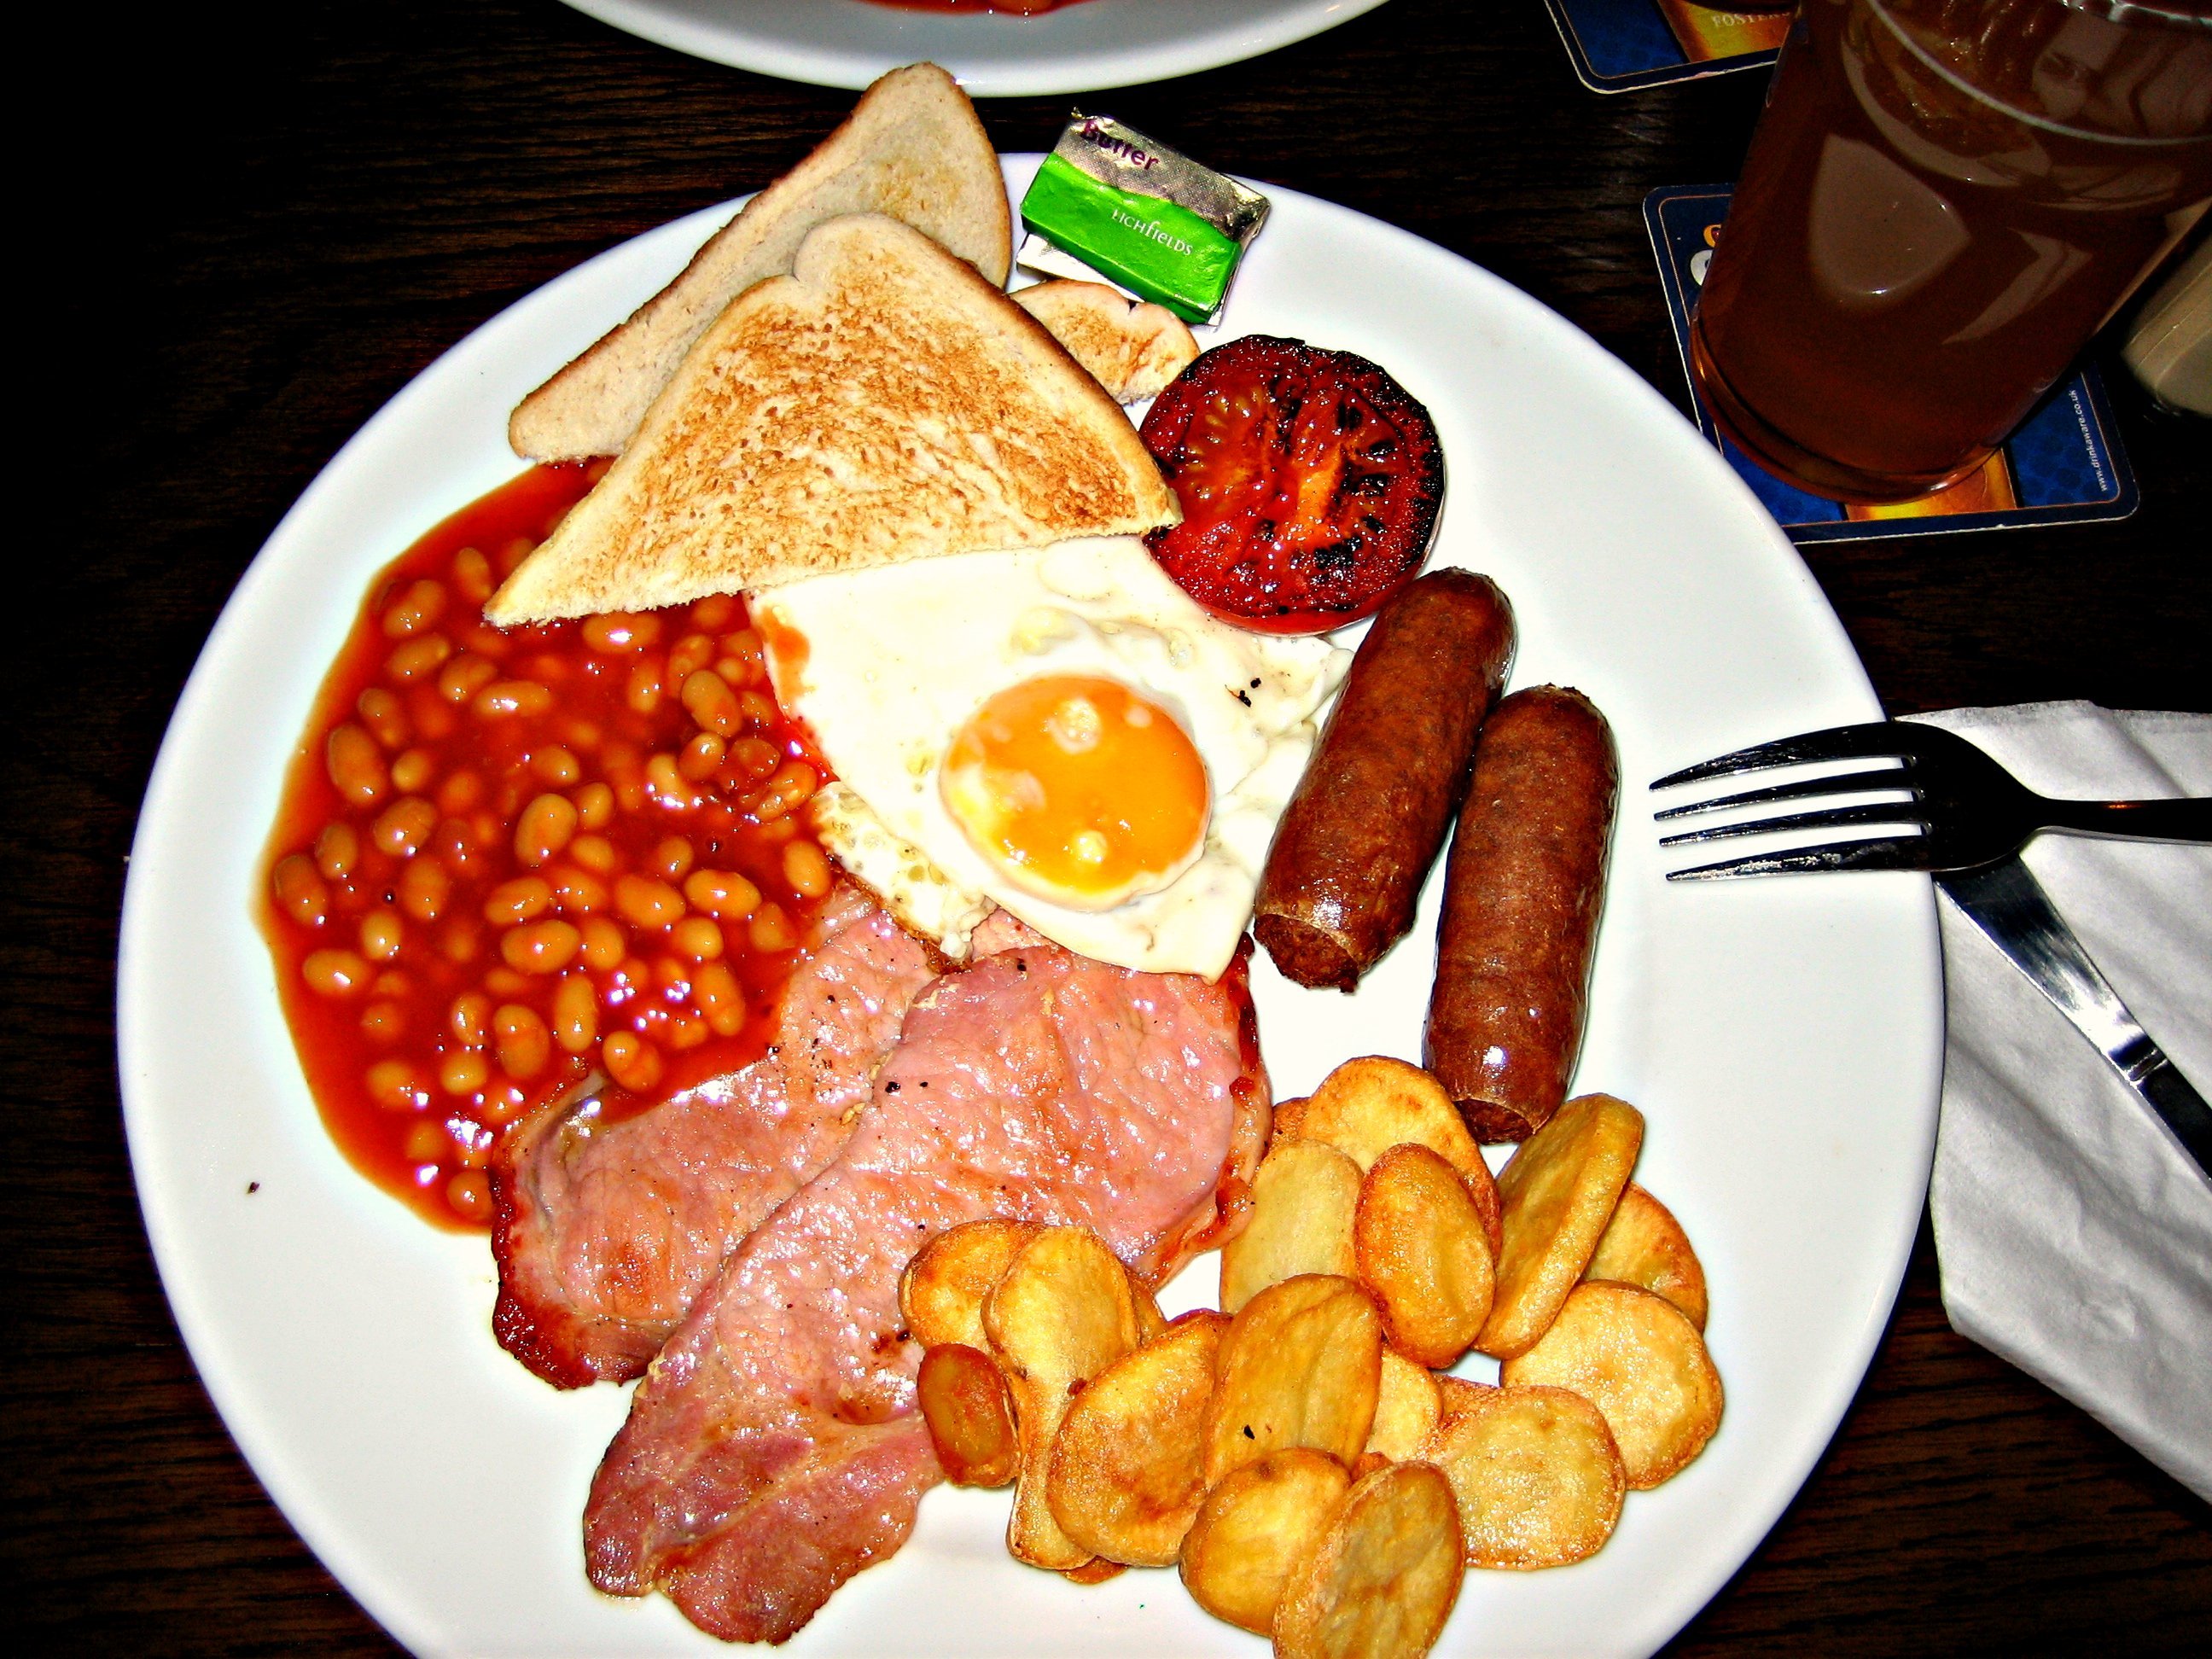 English dishes. Английский завтрак. Британская кухня. Традиционная английская еда. Традиционный английский завтрак.